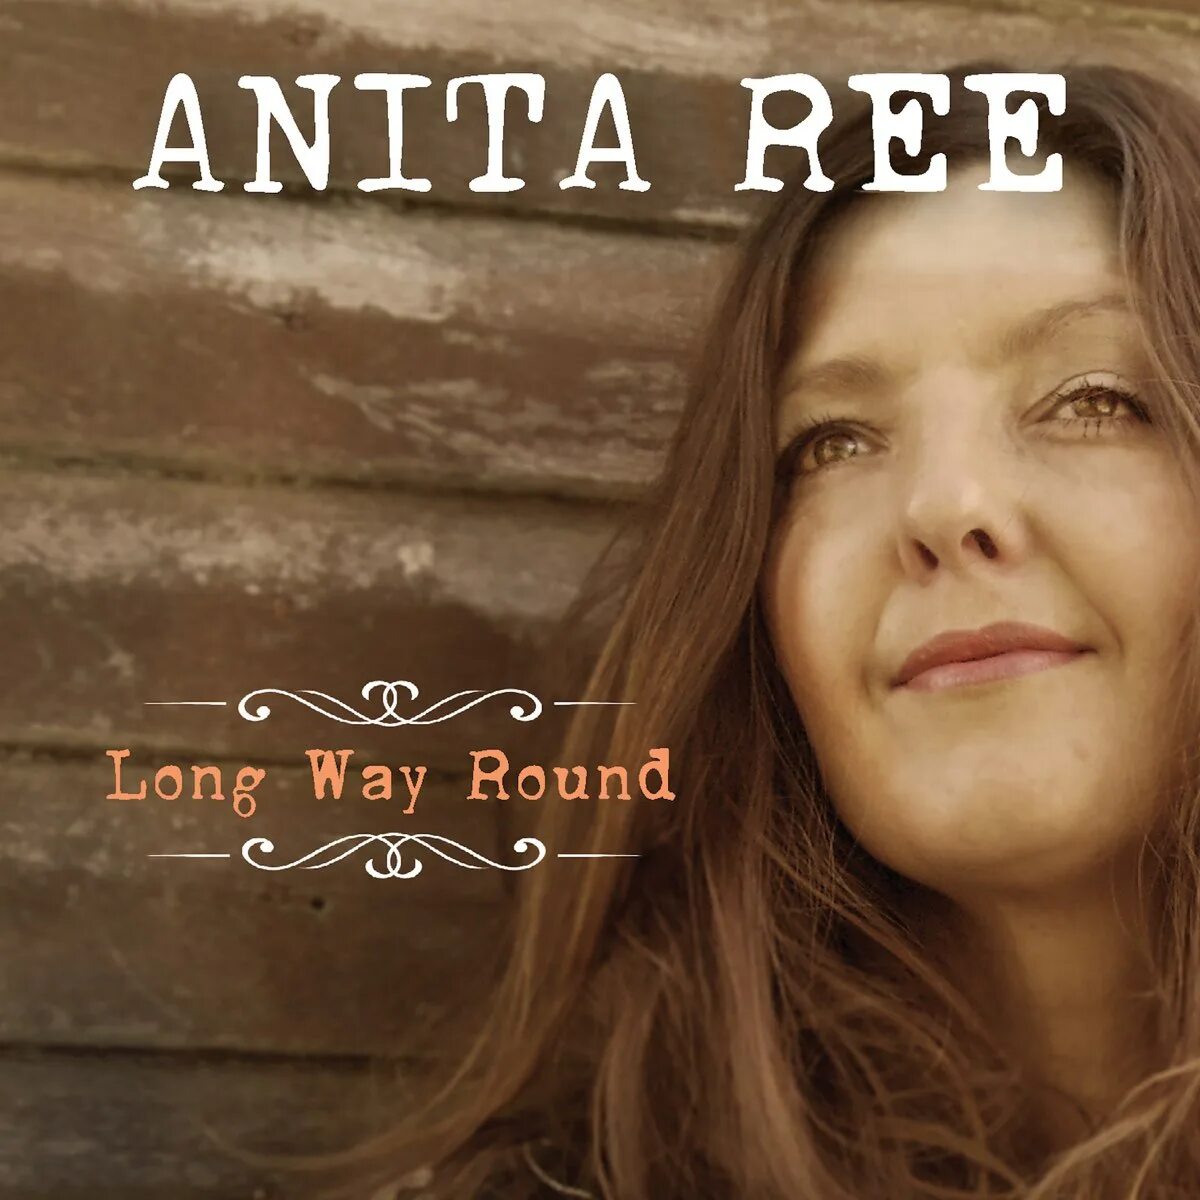 The other way round. Anita ree. Anita rounded.